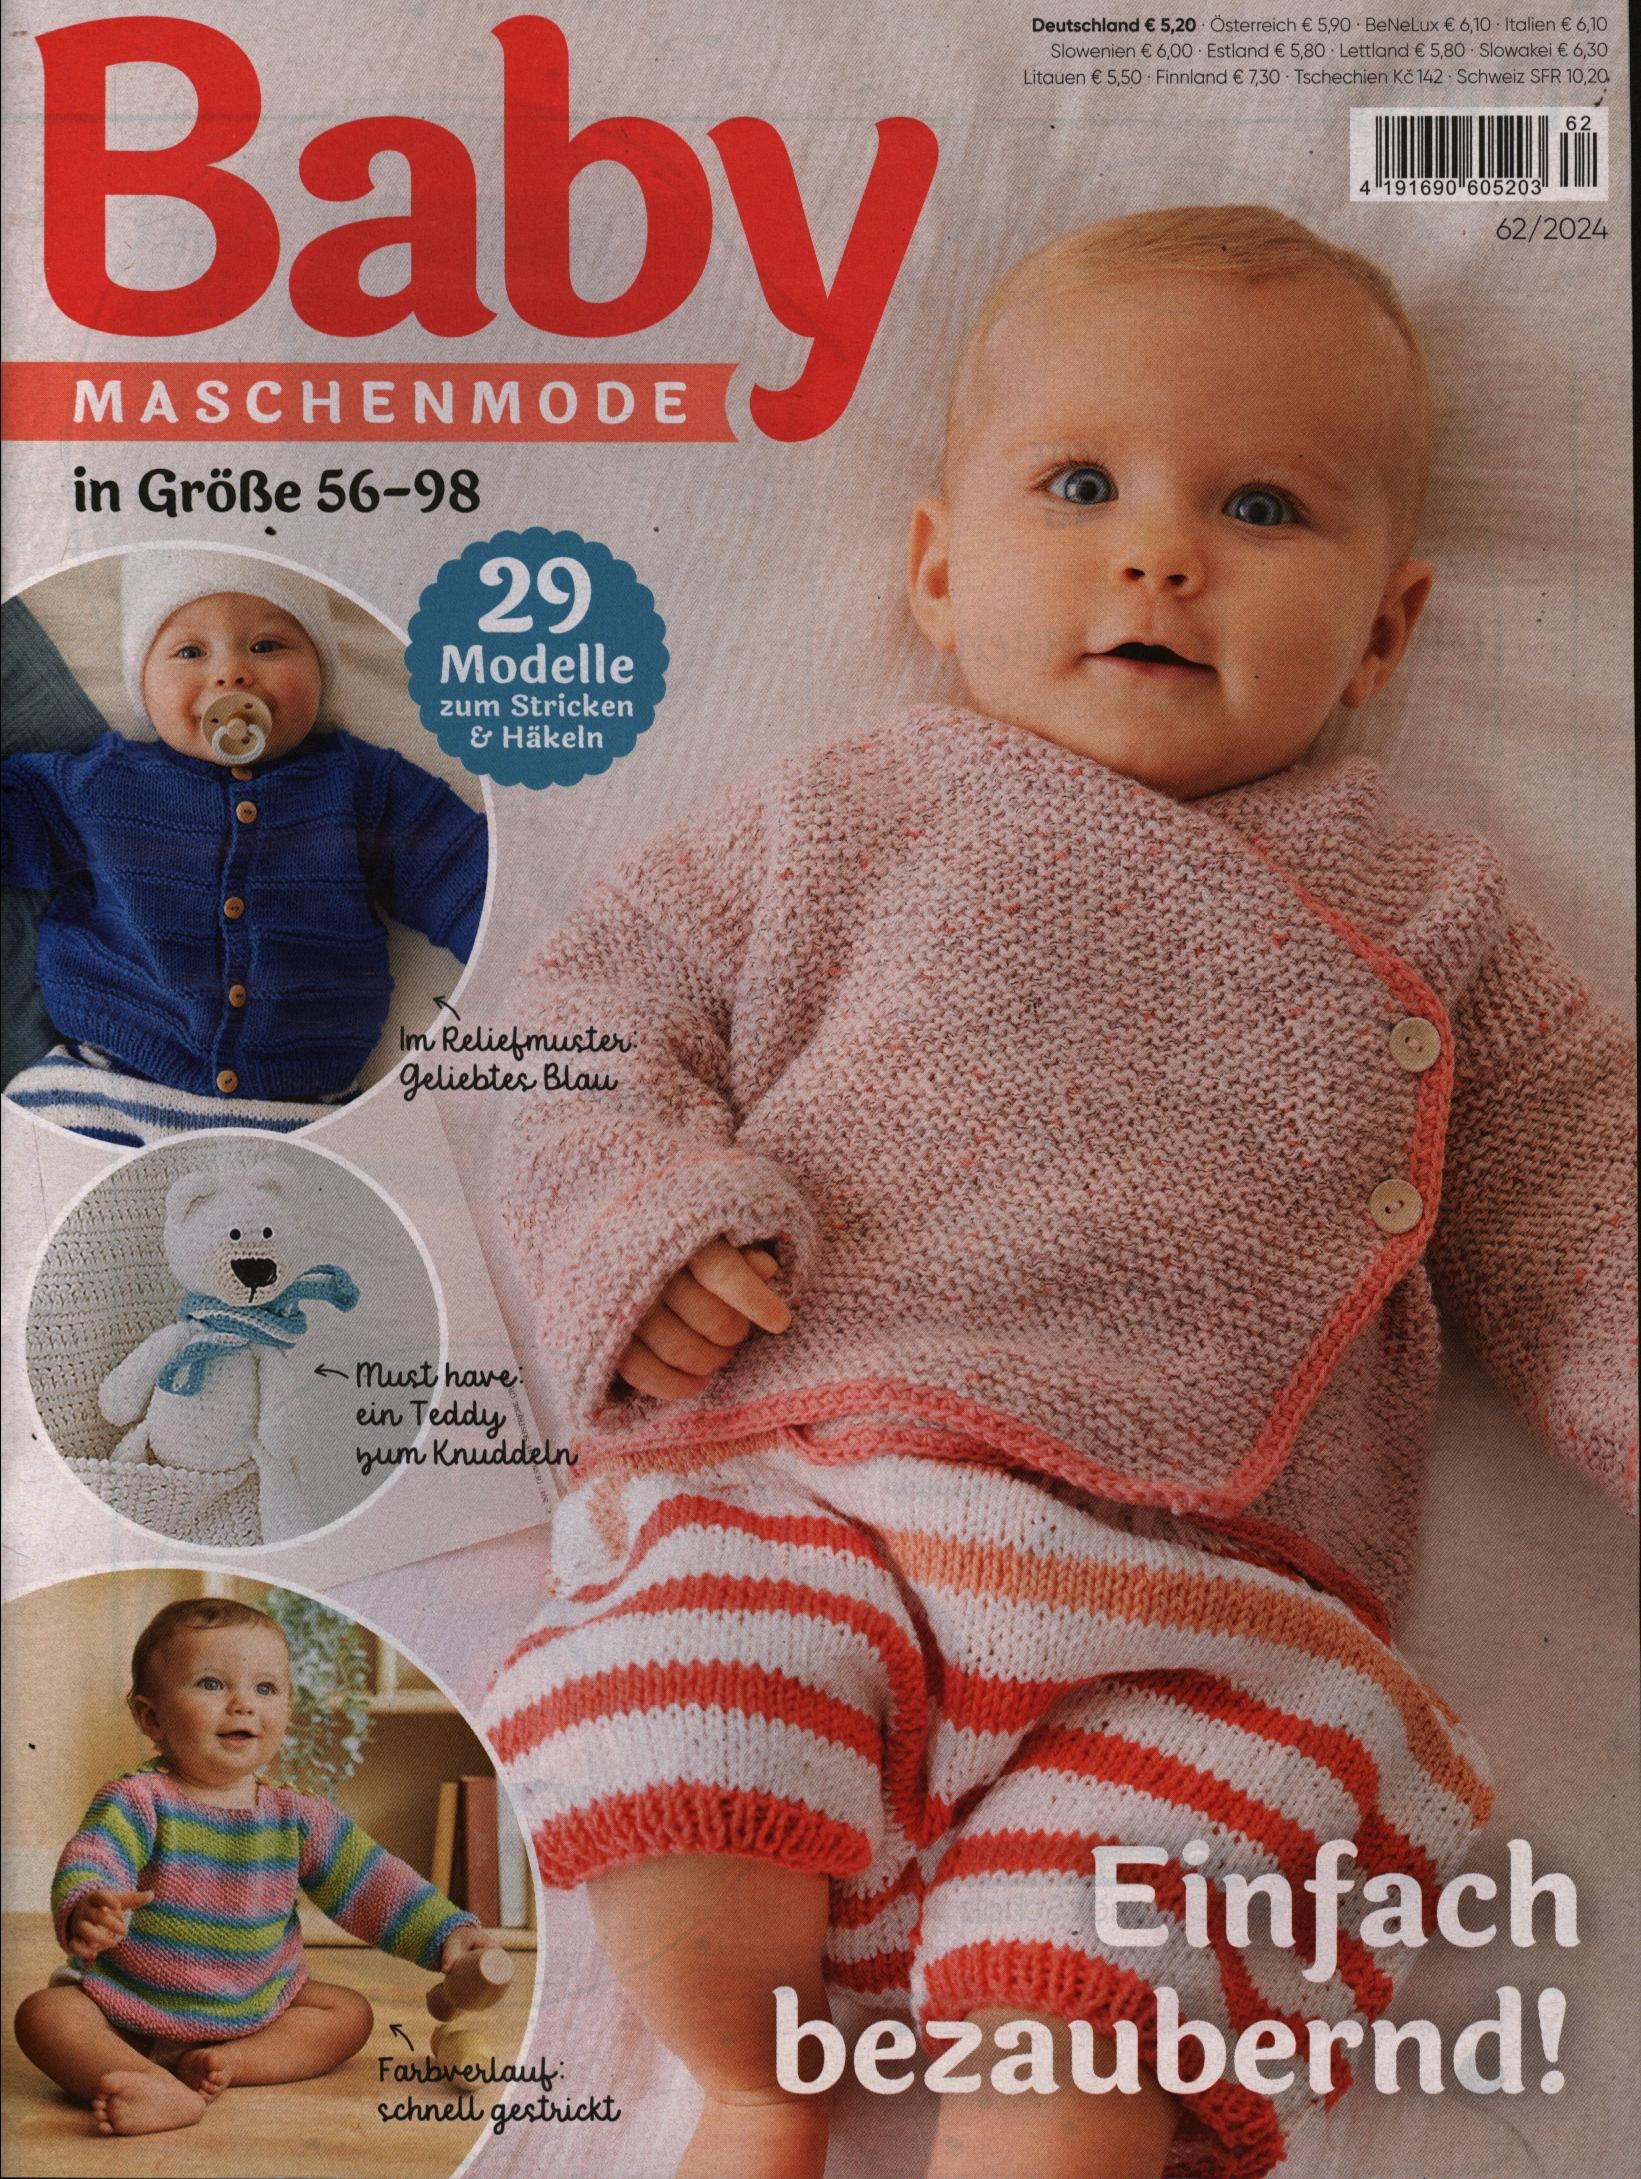 Baby maschenmode 62/2024